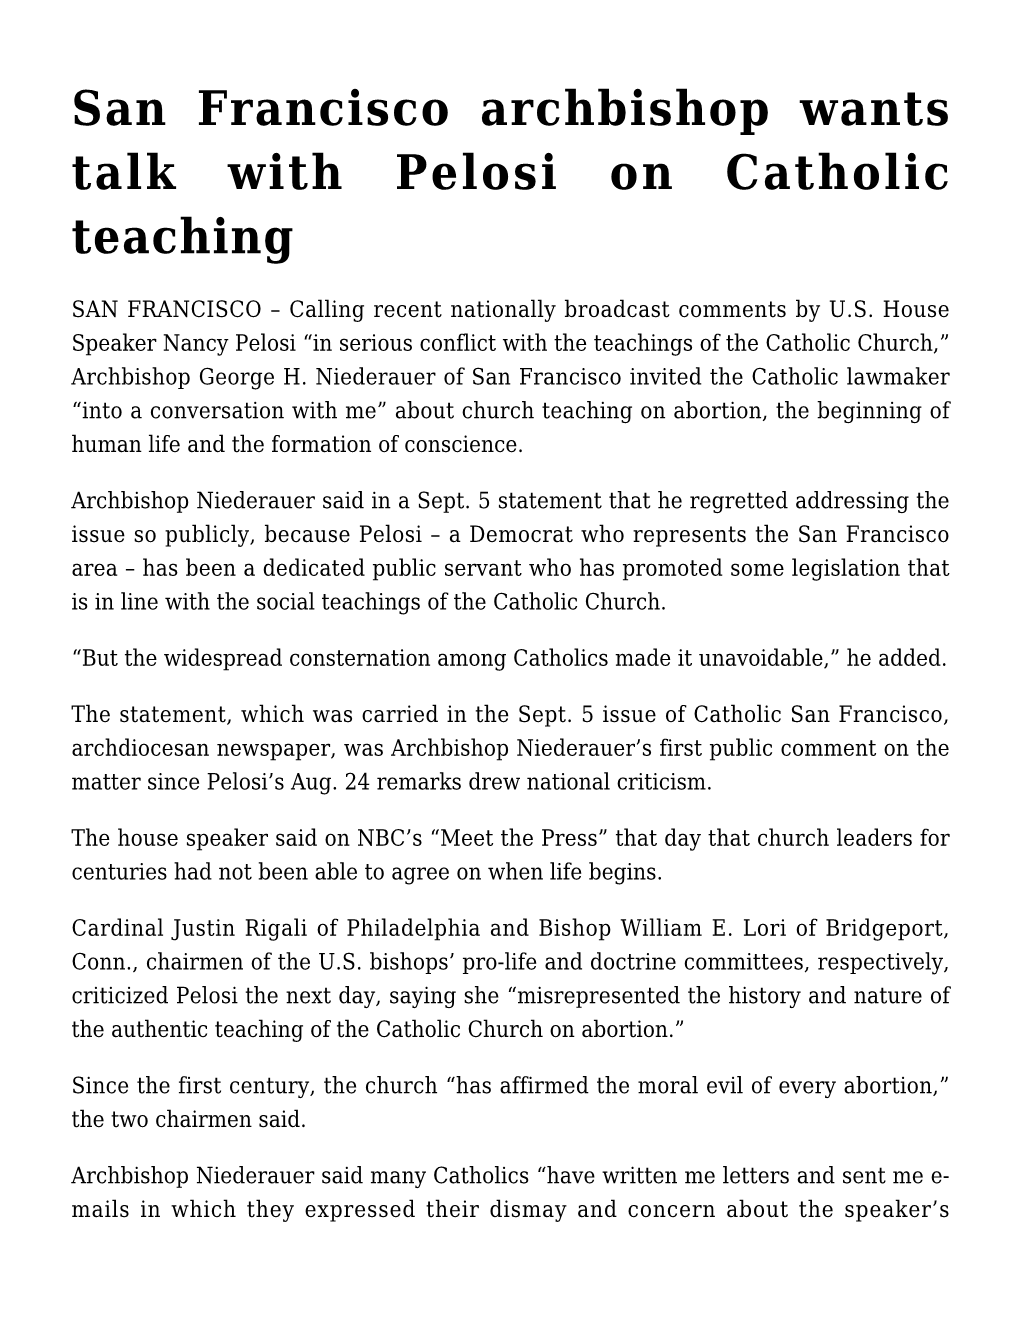 San Francisco Archbishop Wants Talk with Pelosi on Catholic Teaching